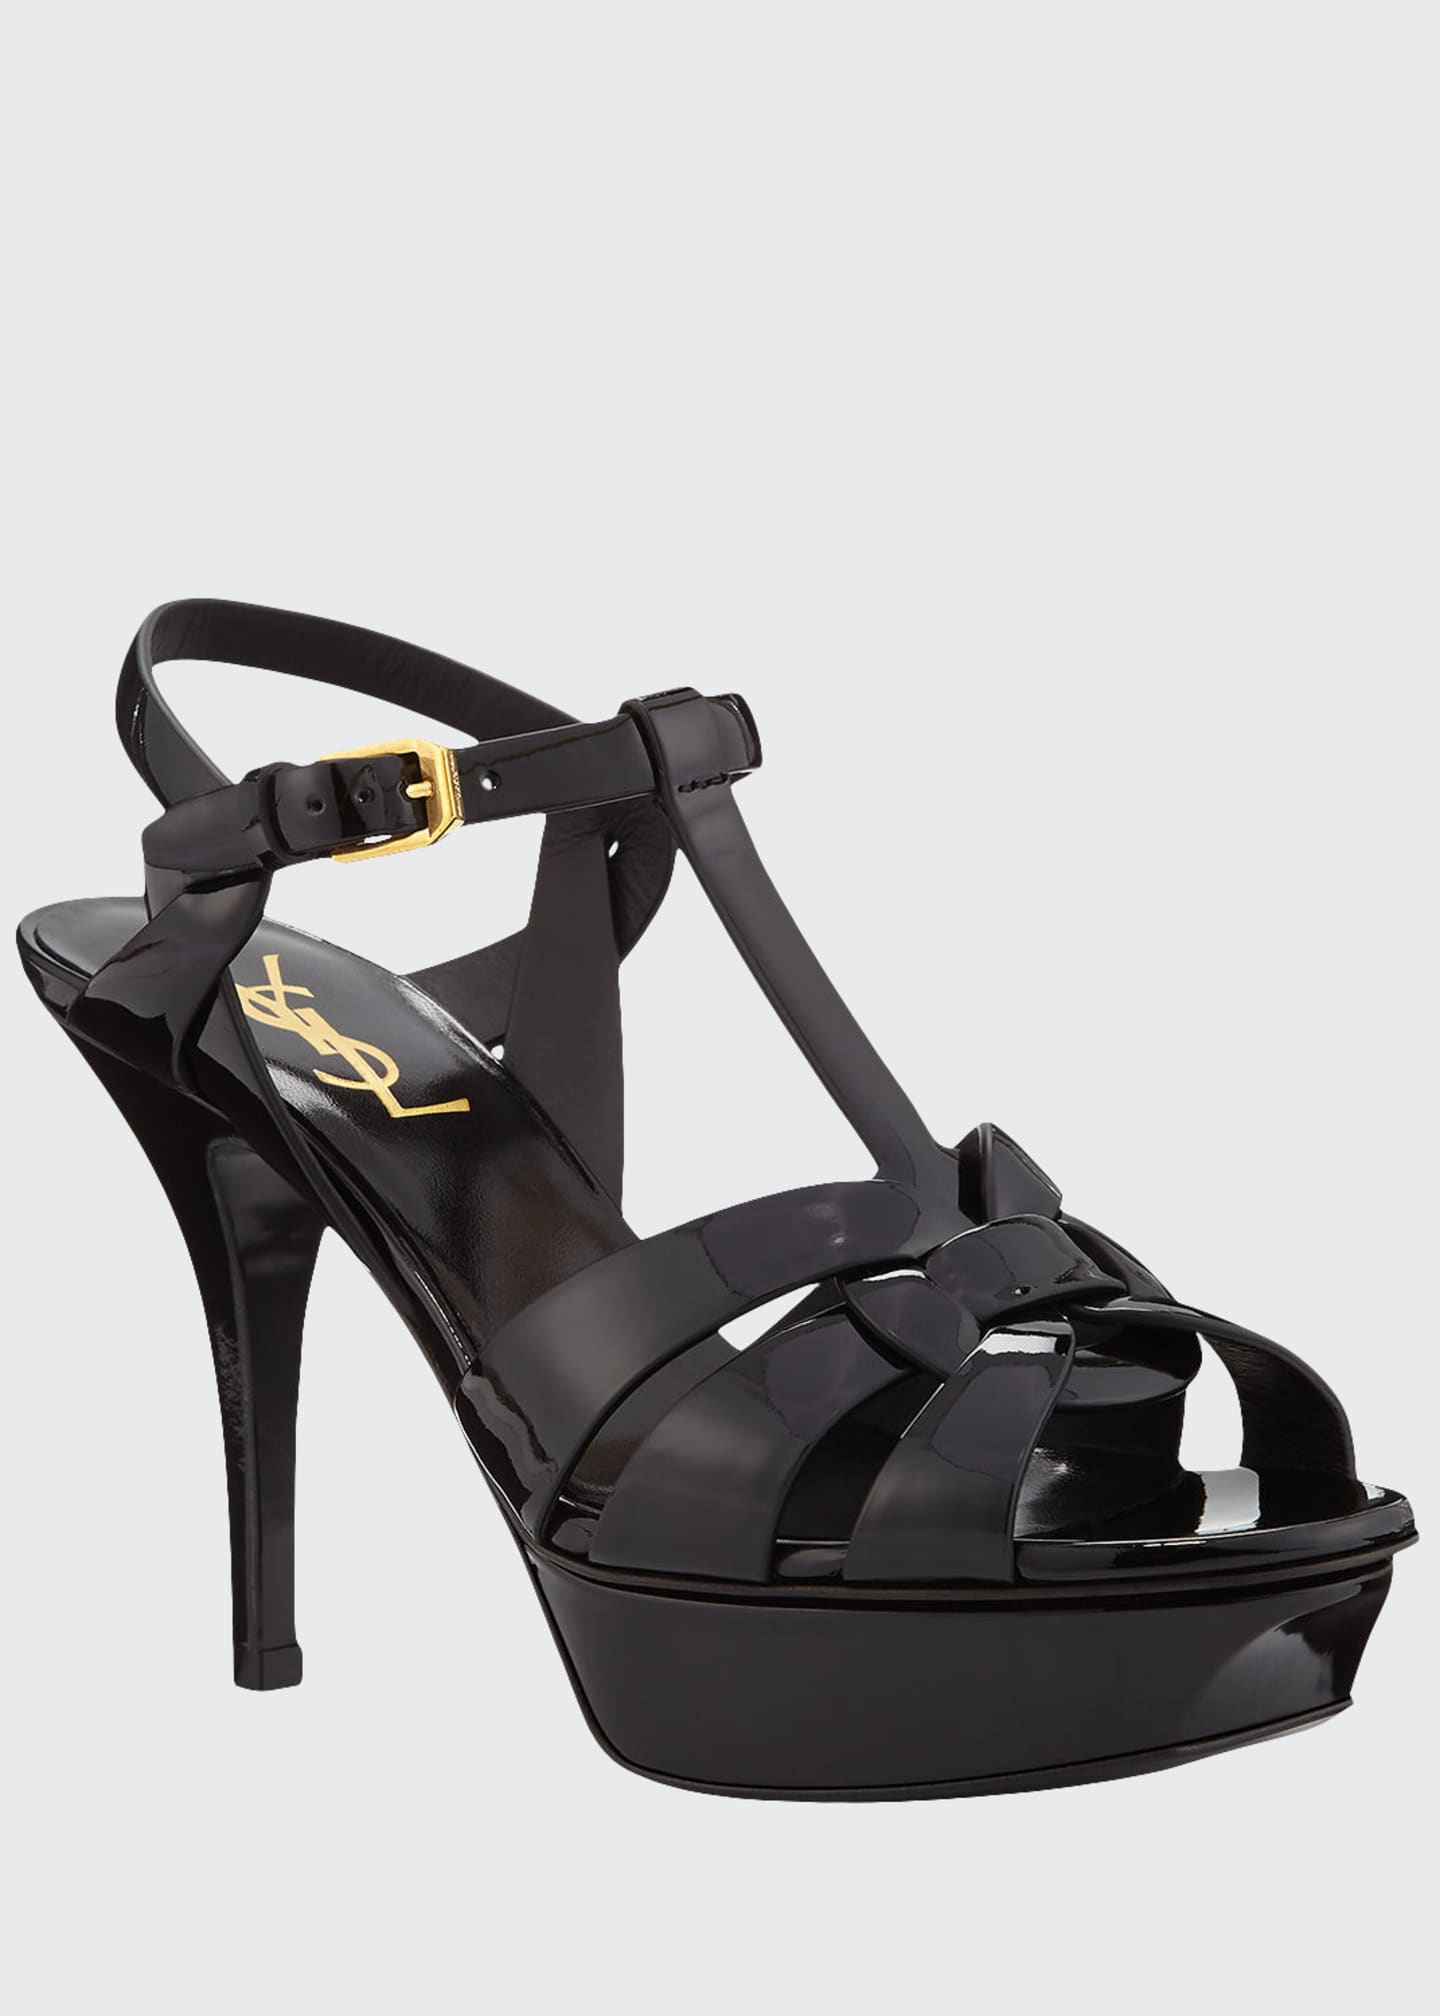 Saint Laurent Tribute Patent Leather Platform Sandals - Bergdorf Goodman